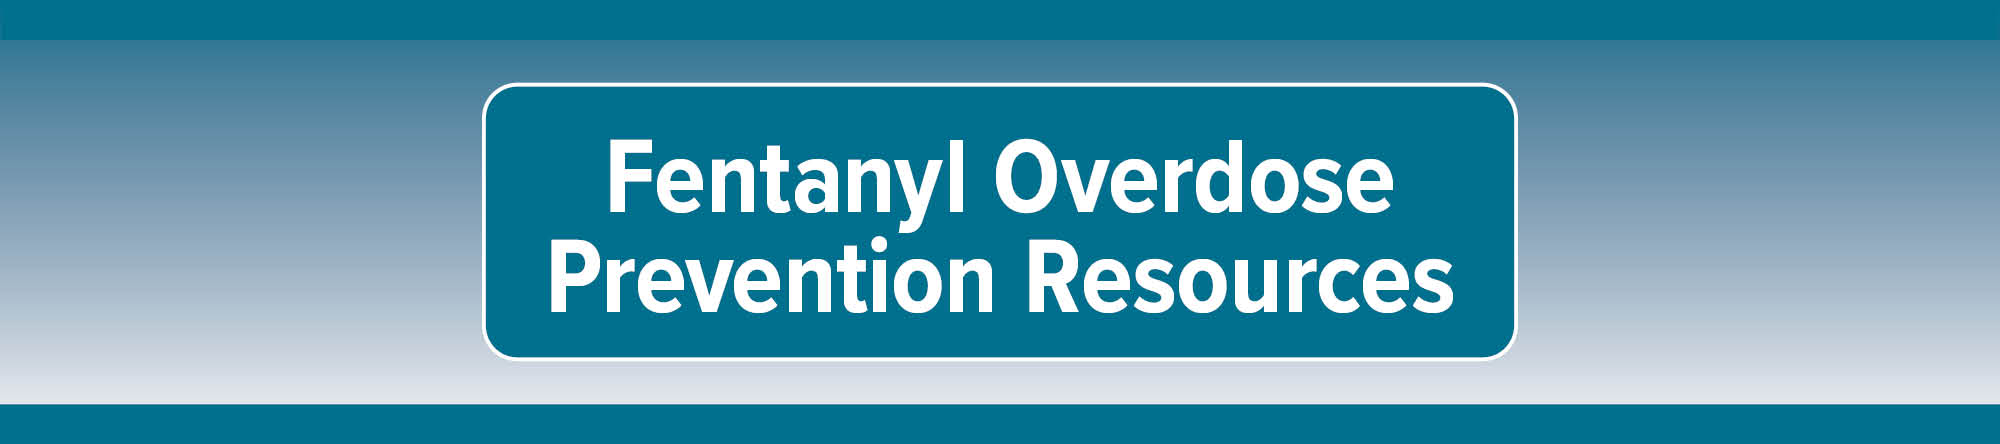 Fentanyl Overdose Prevention Resources